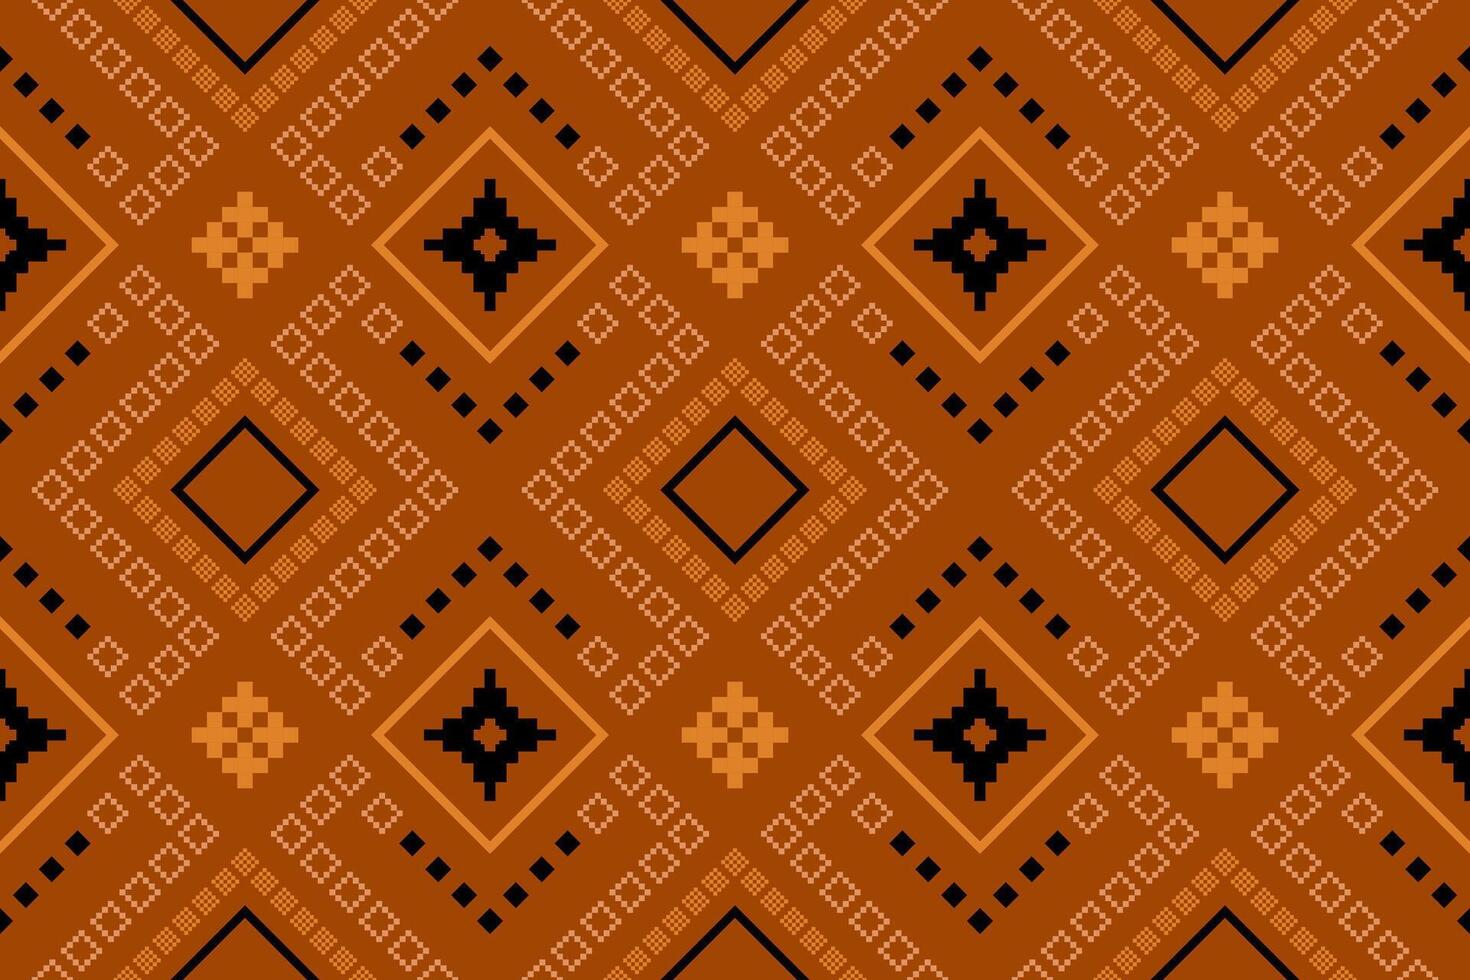 laranja safras Cruz ponto tradicional étnico padronizar paisley flor ikat fundo abstrato asteca africano indonésio indiano desatado padronizar para tecido impressão pano vestir tapete cortinas e sarongue vetor